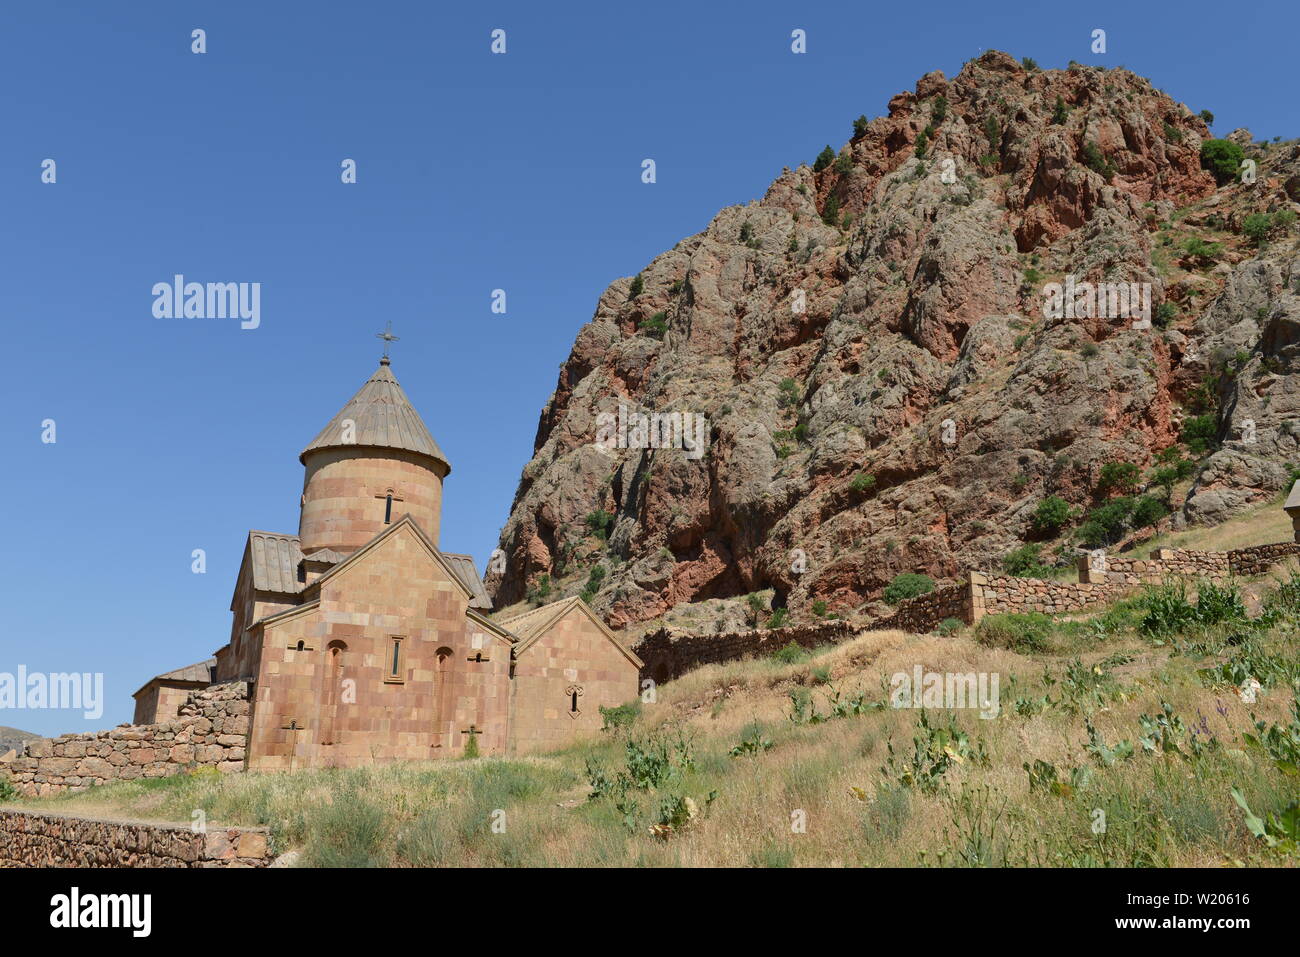 Armenien reisen Highlights Stockfoto